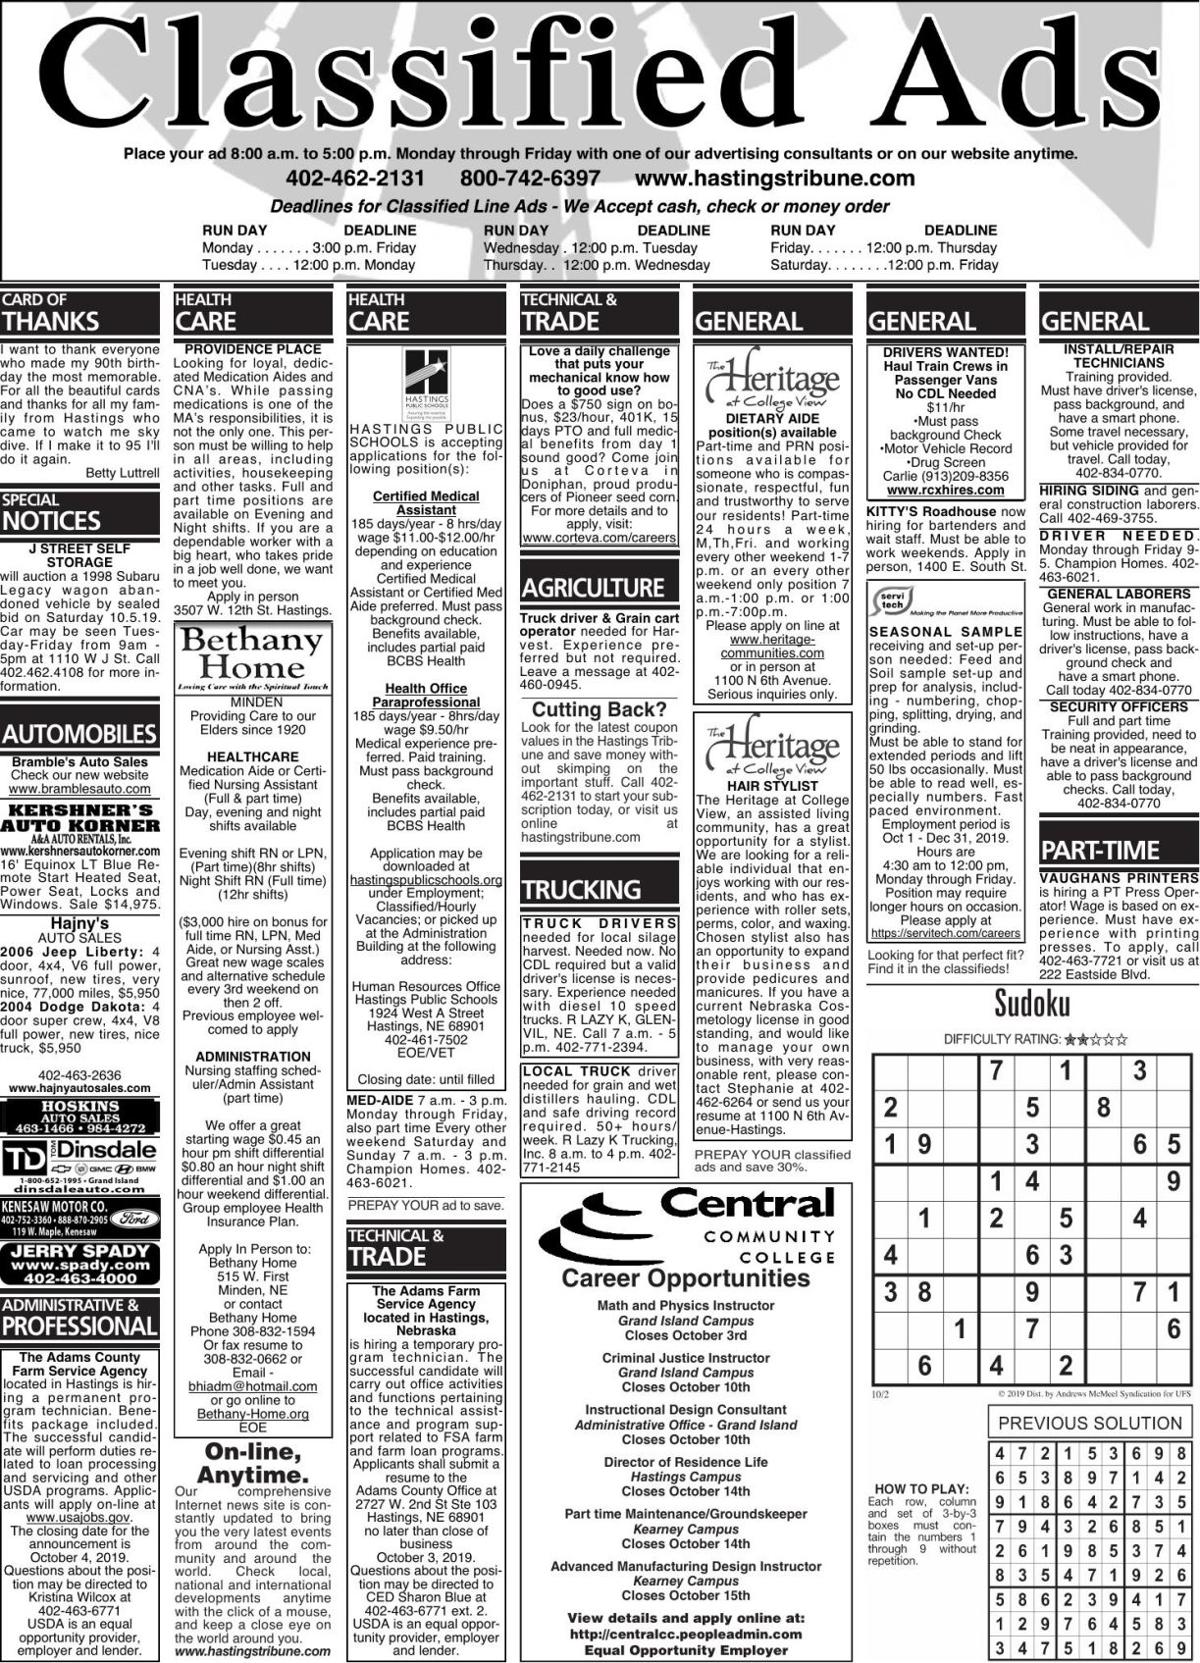 Star tribune classified ads jobs